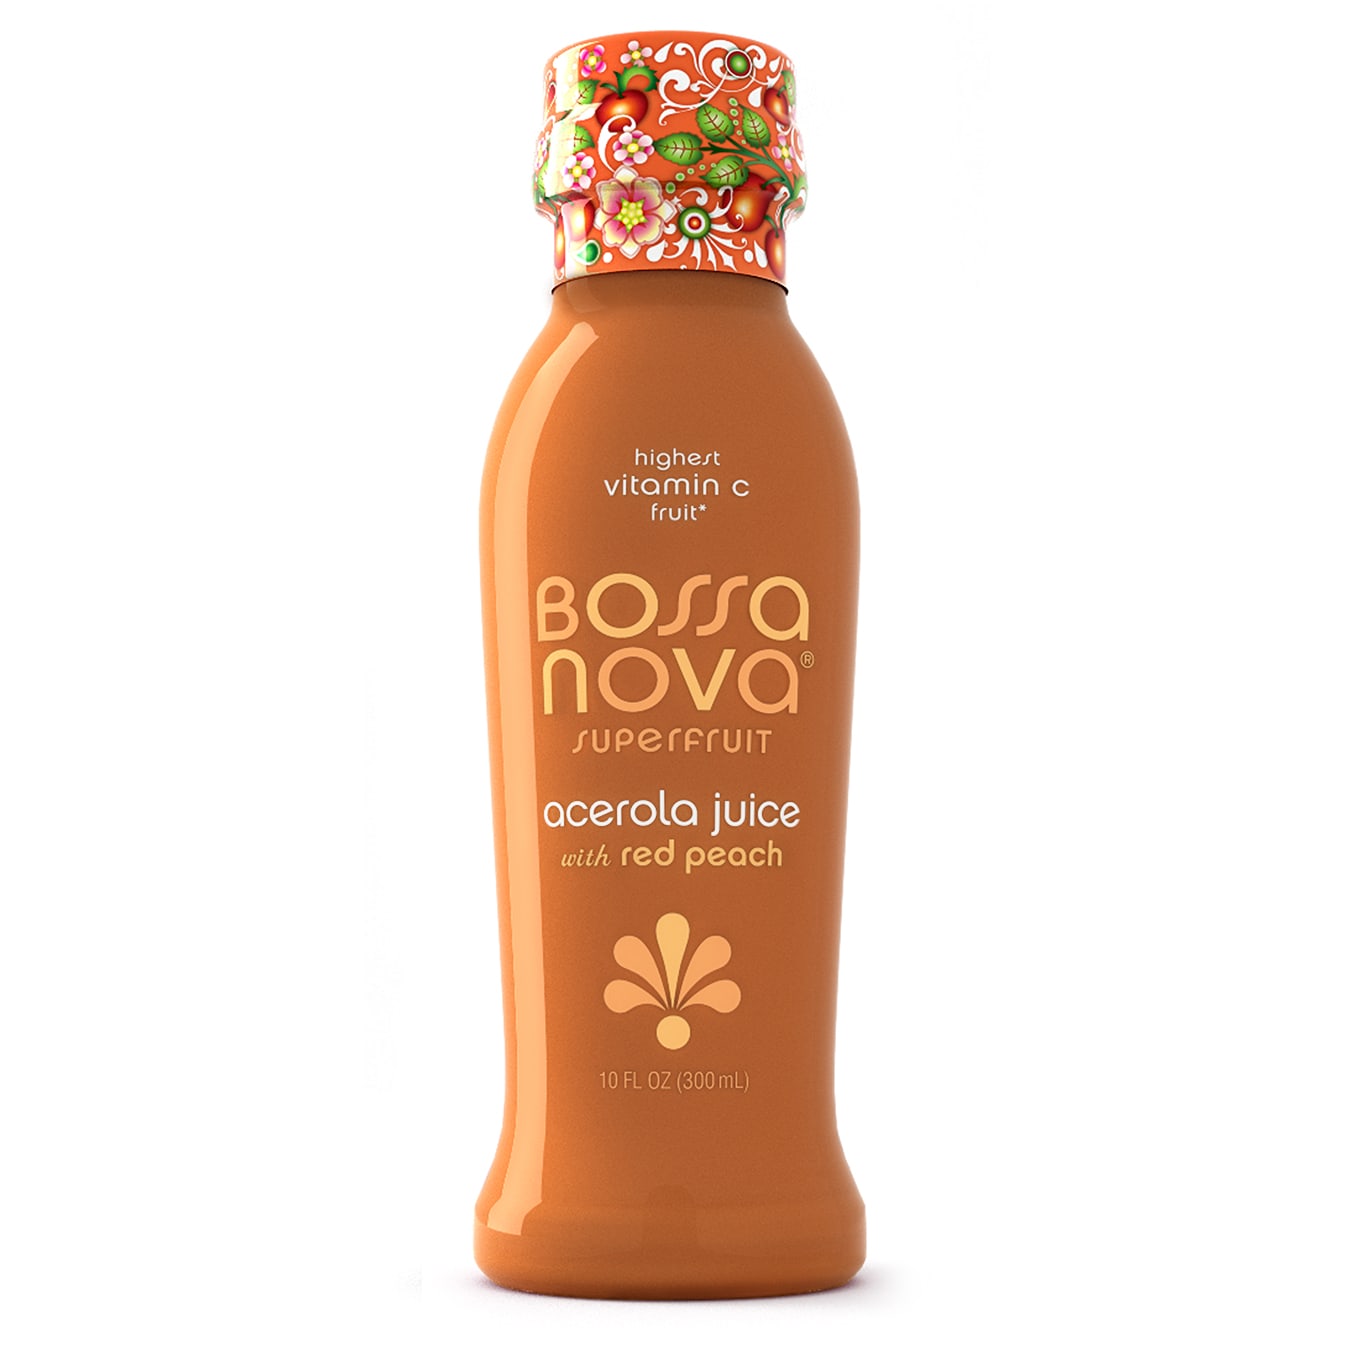 Bossa Nova Super Acerola Peach juice bottle packaging design